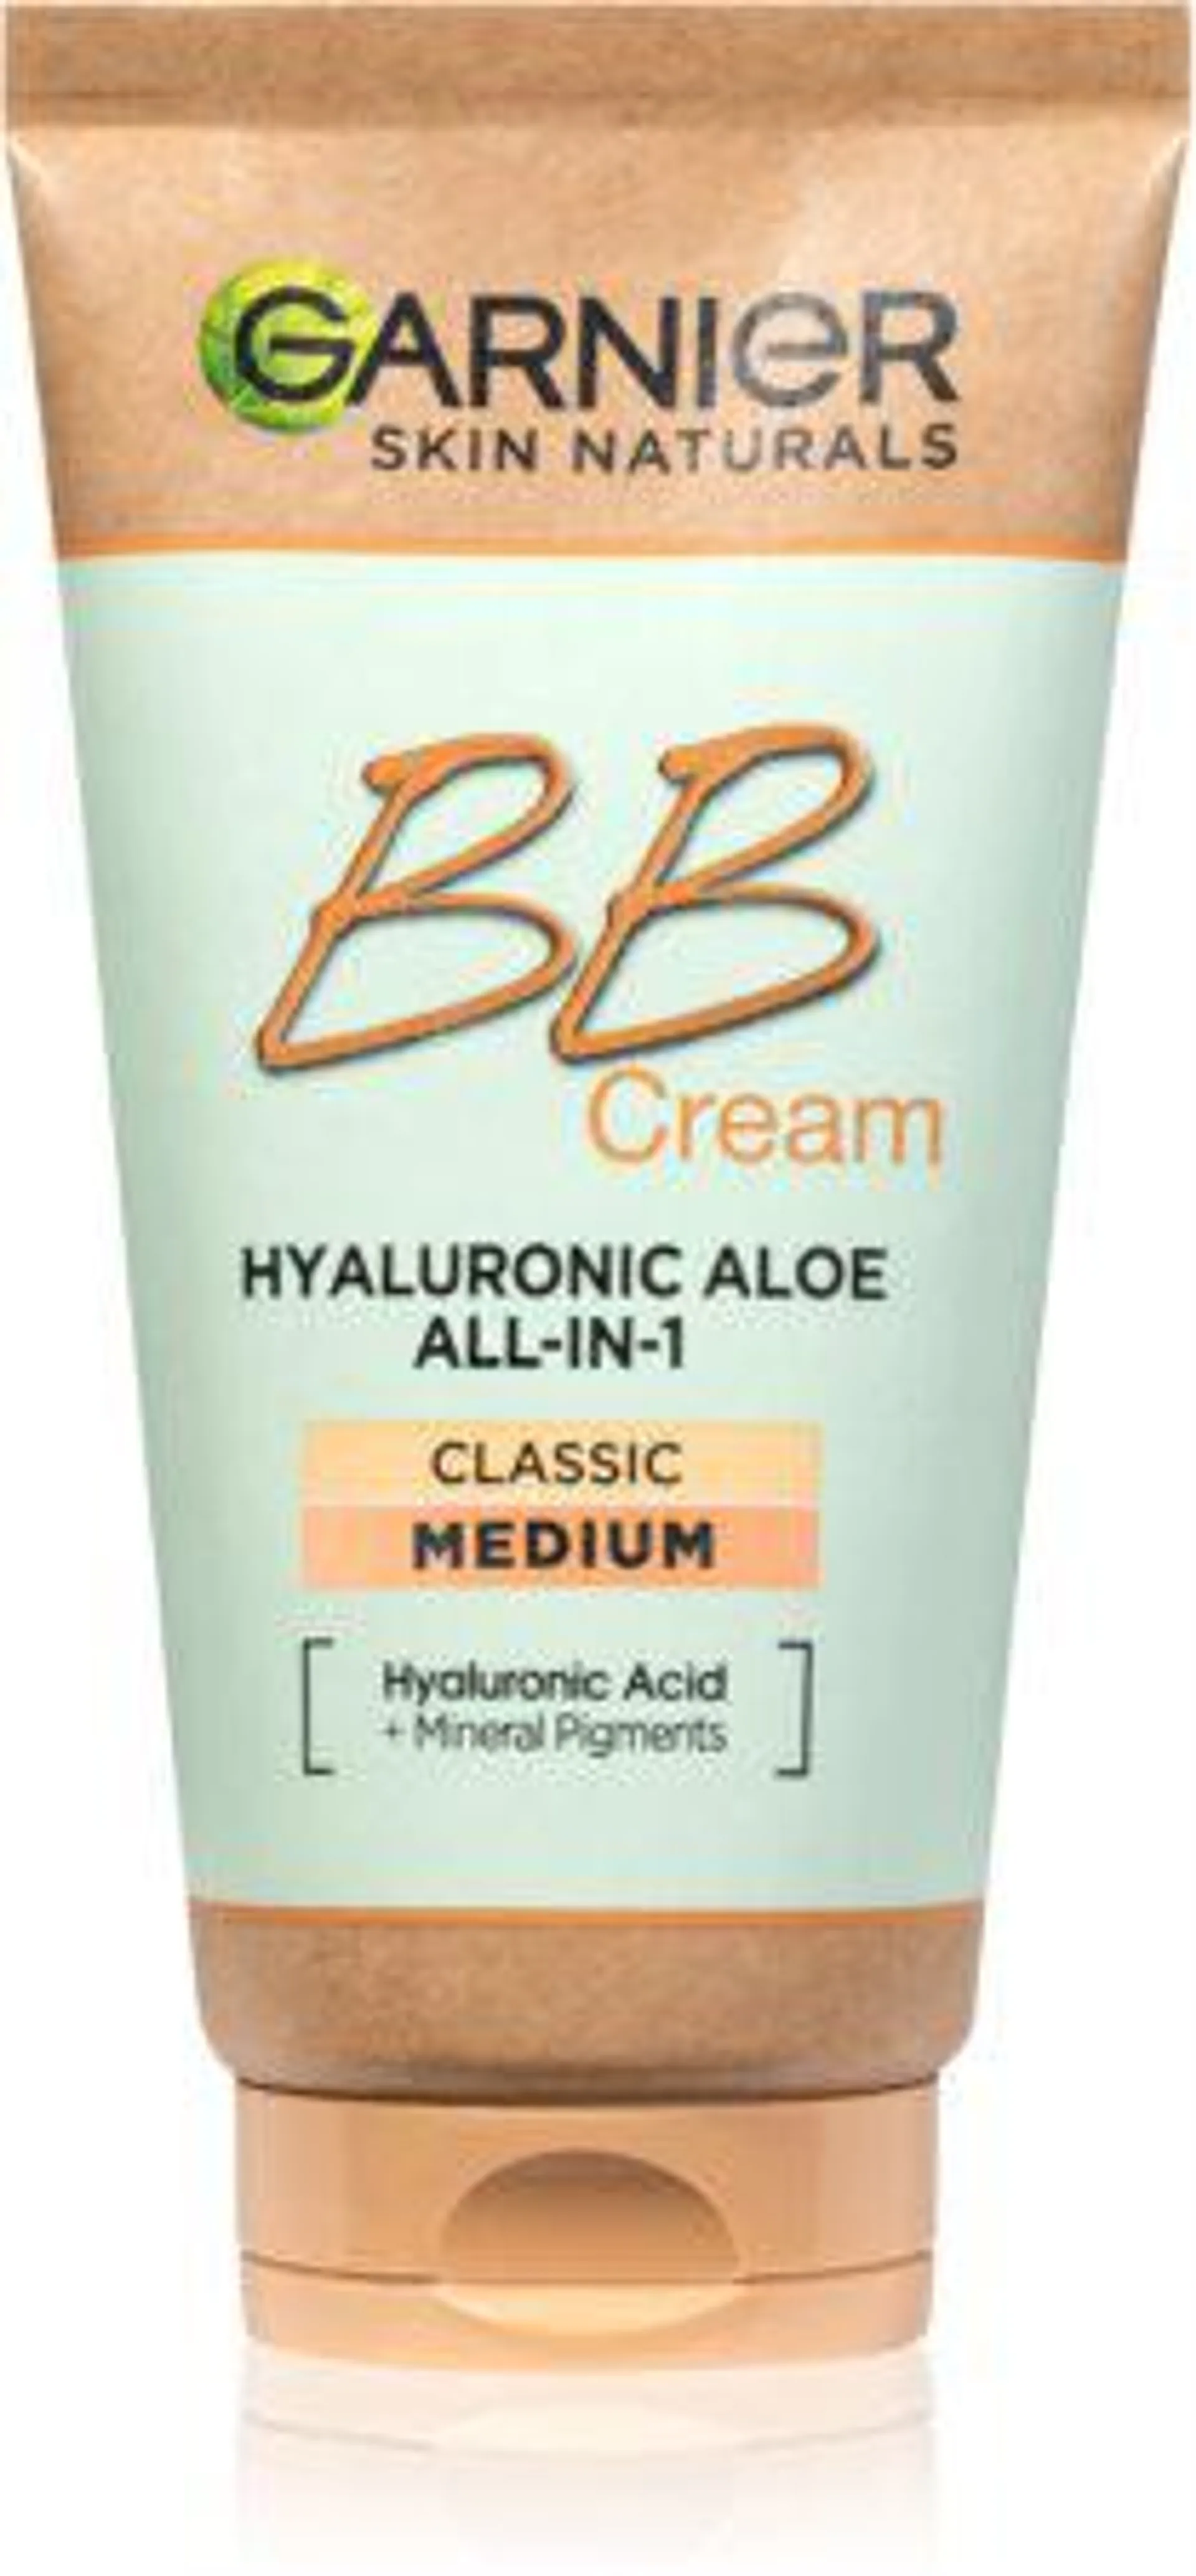 Hyaluronic Aloe All-in-1 BB Cream